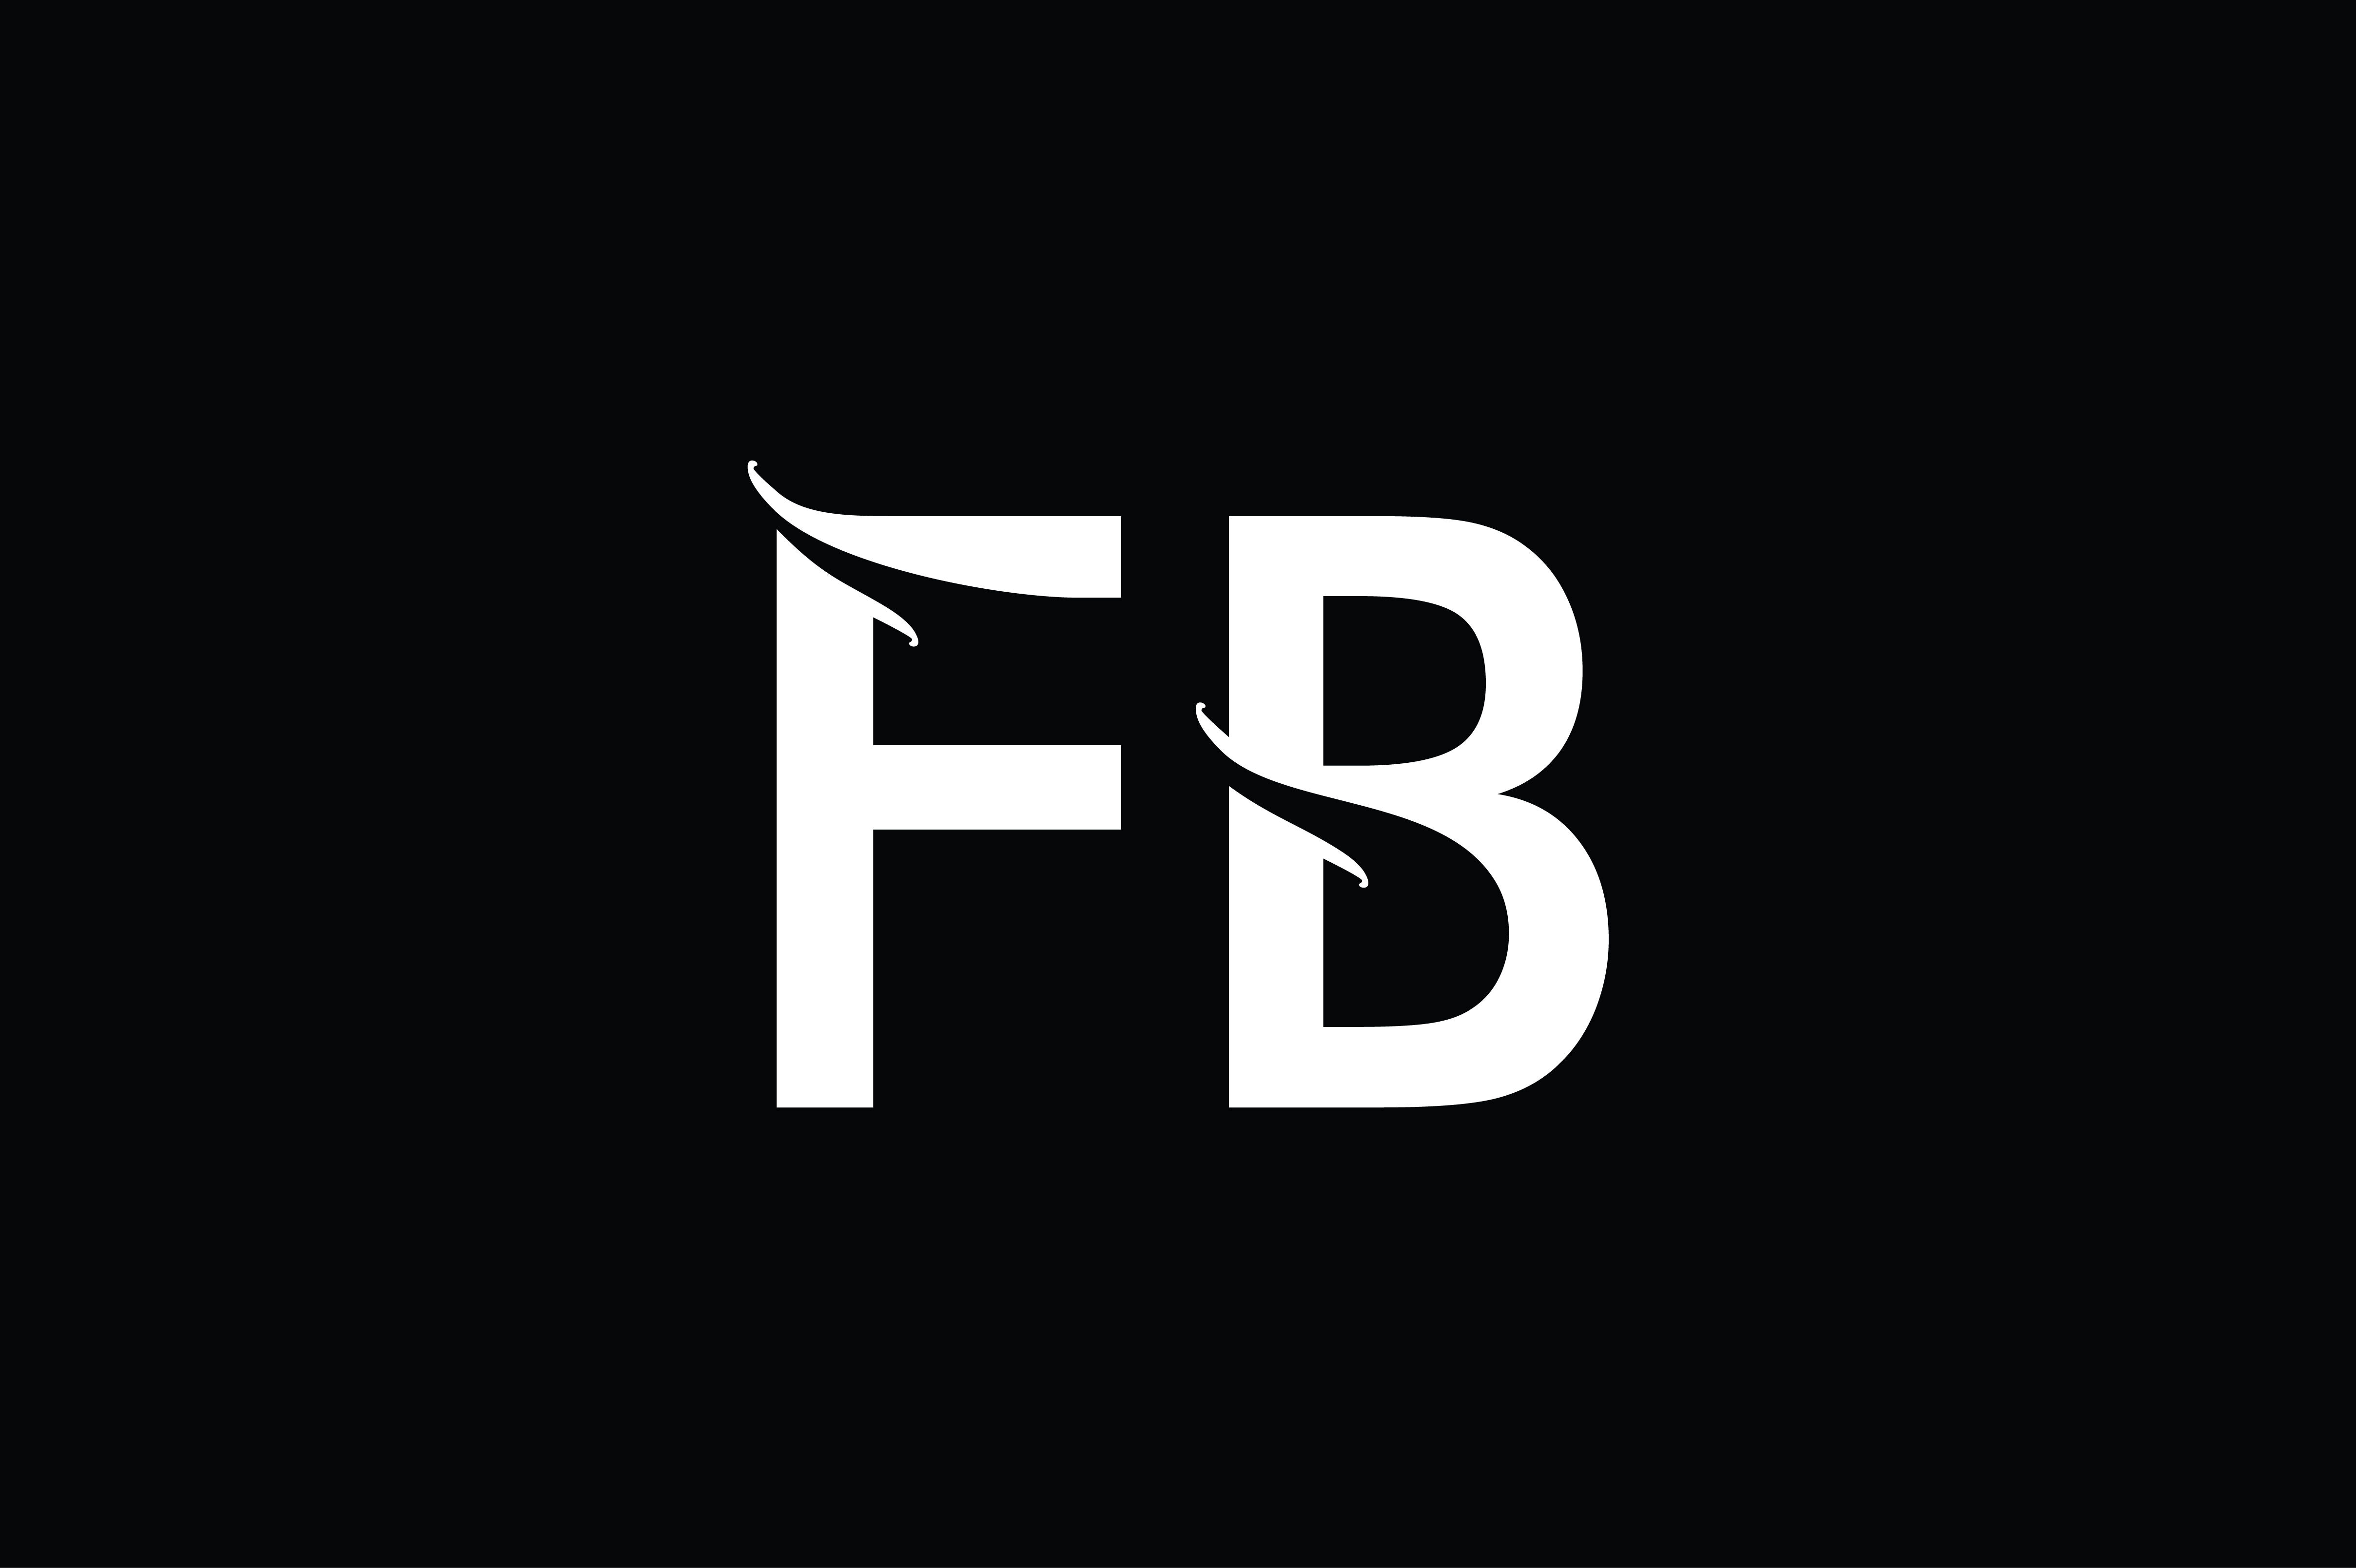 fb-monogram-logo-design-by-vectorseller-thehungryjpeg